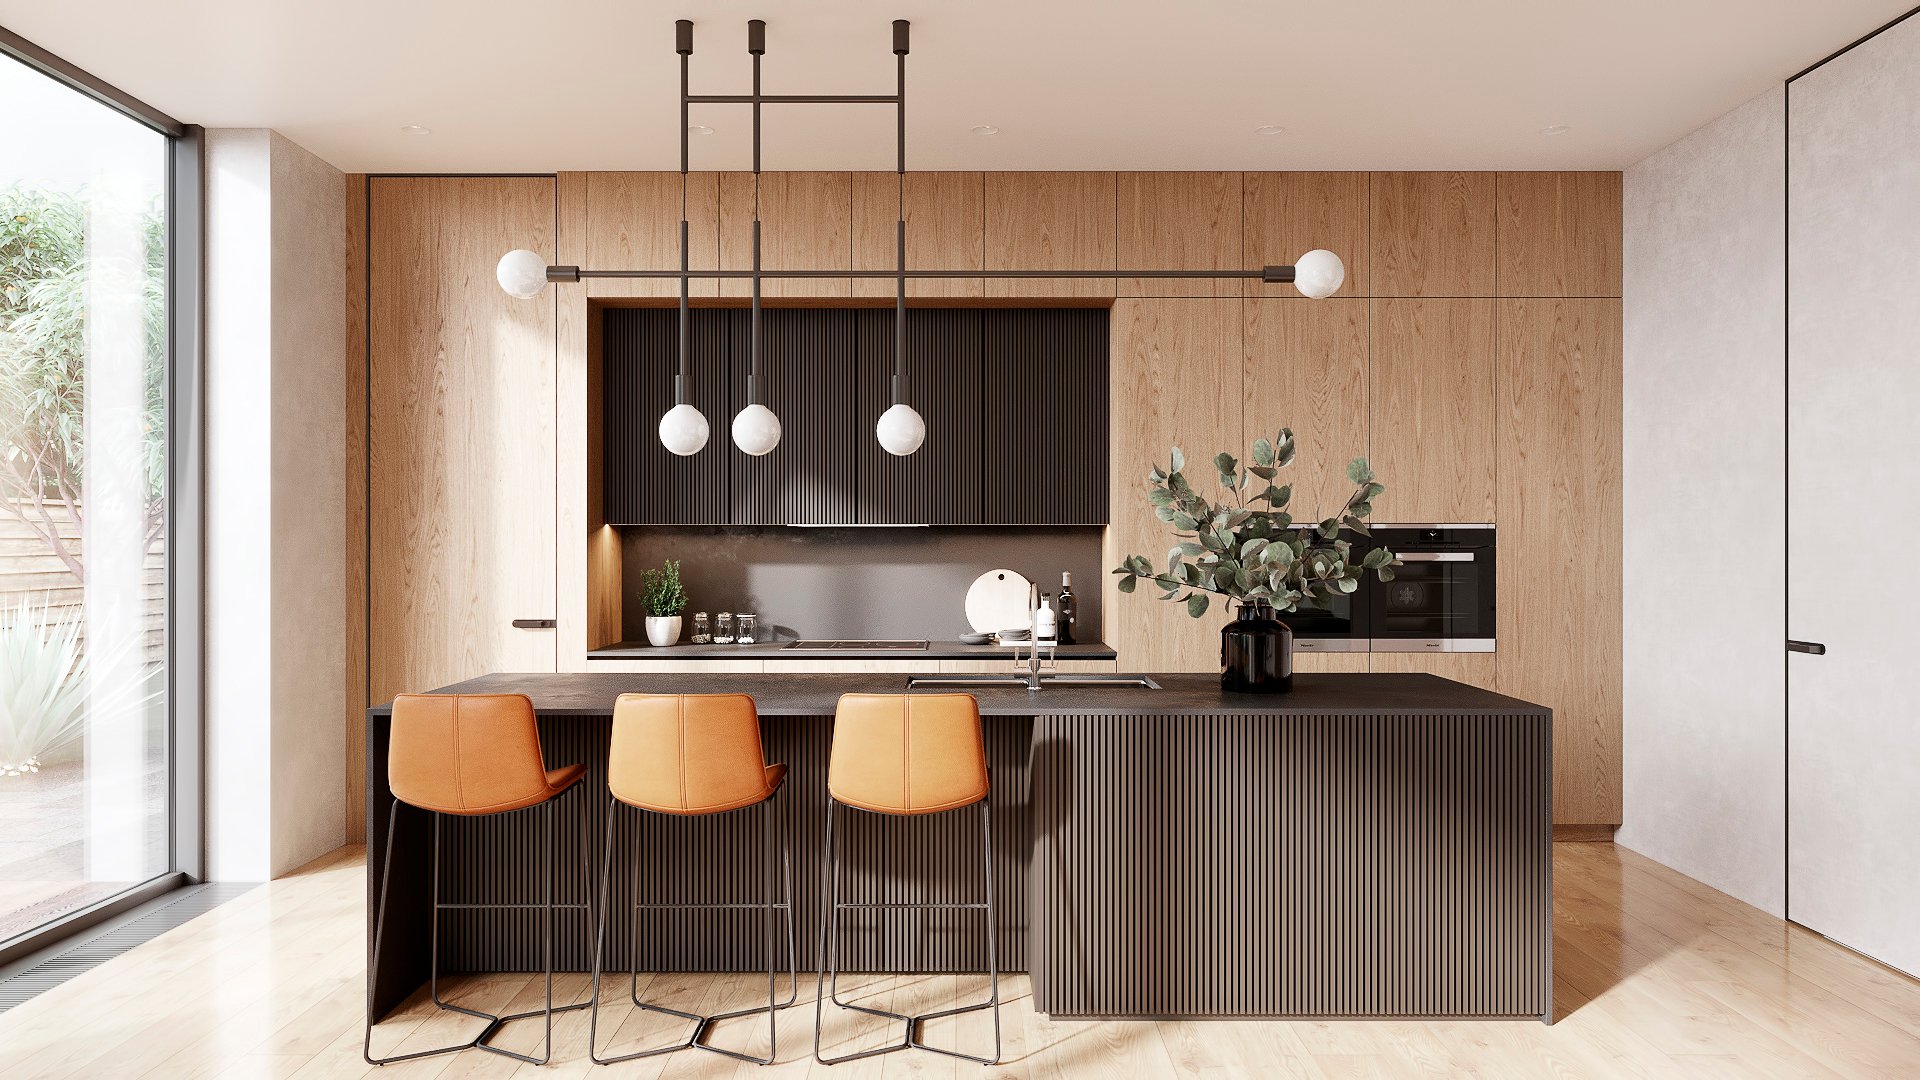 Photorealistic 3D Visualization of a Stylish Kitchen Design